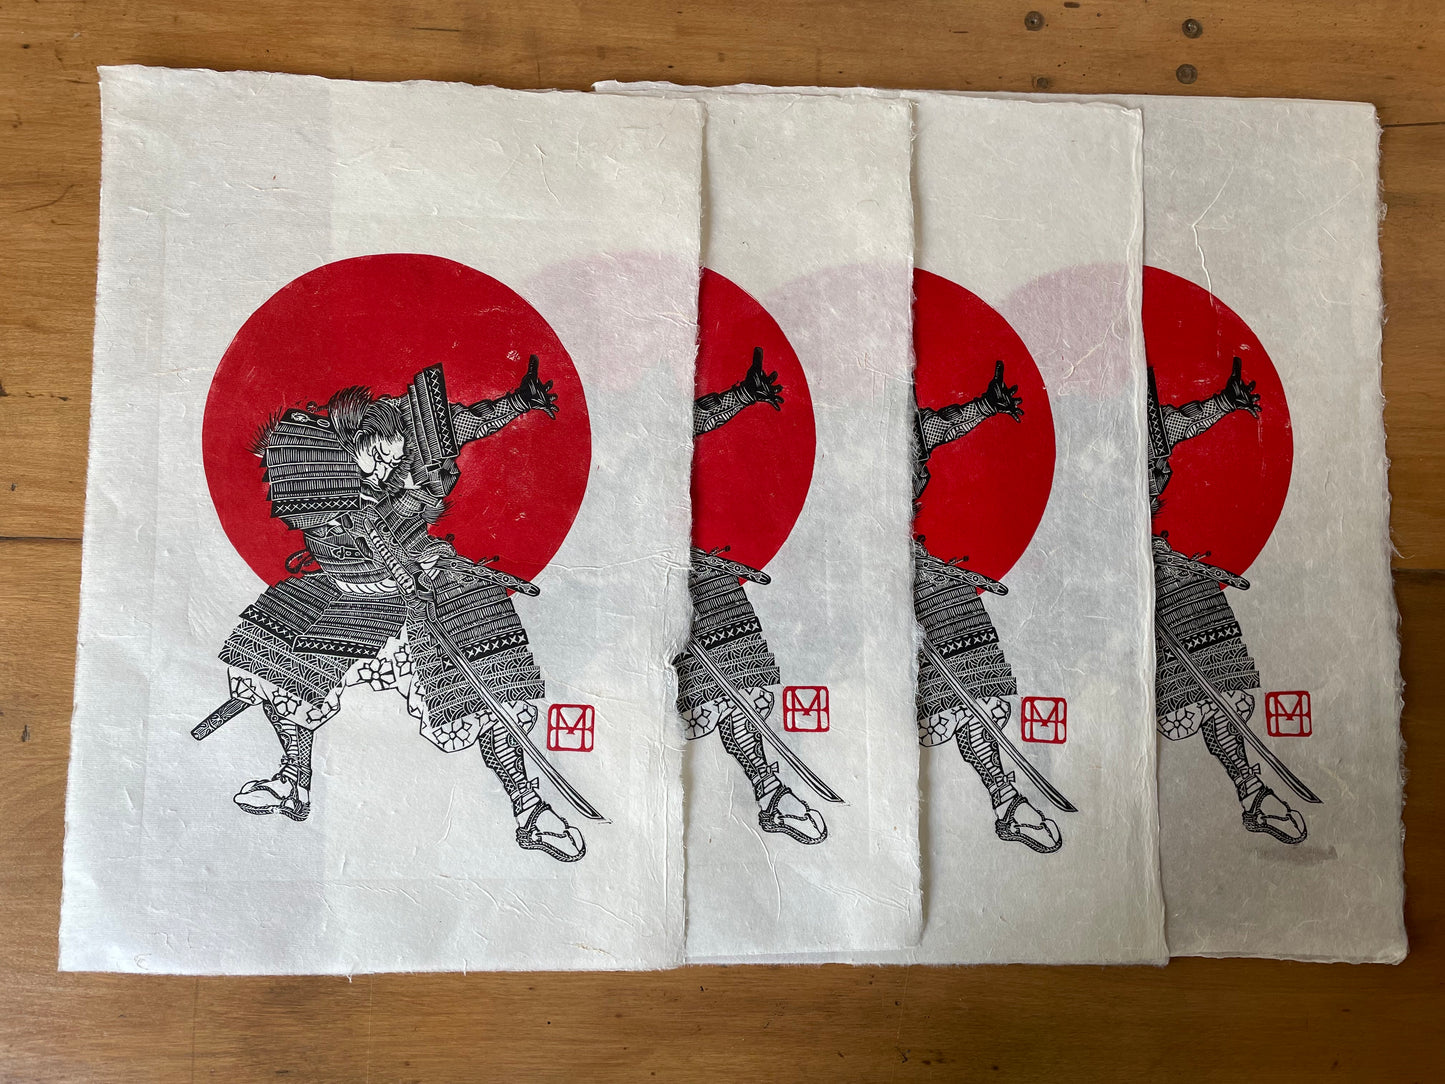 "The Samurai" Print